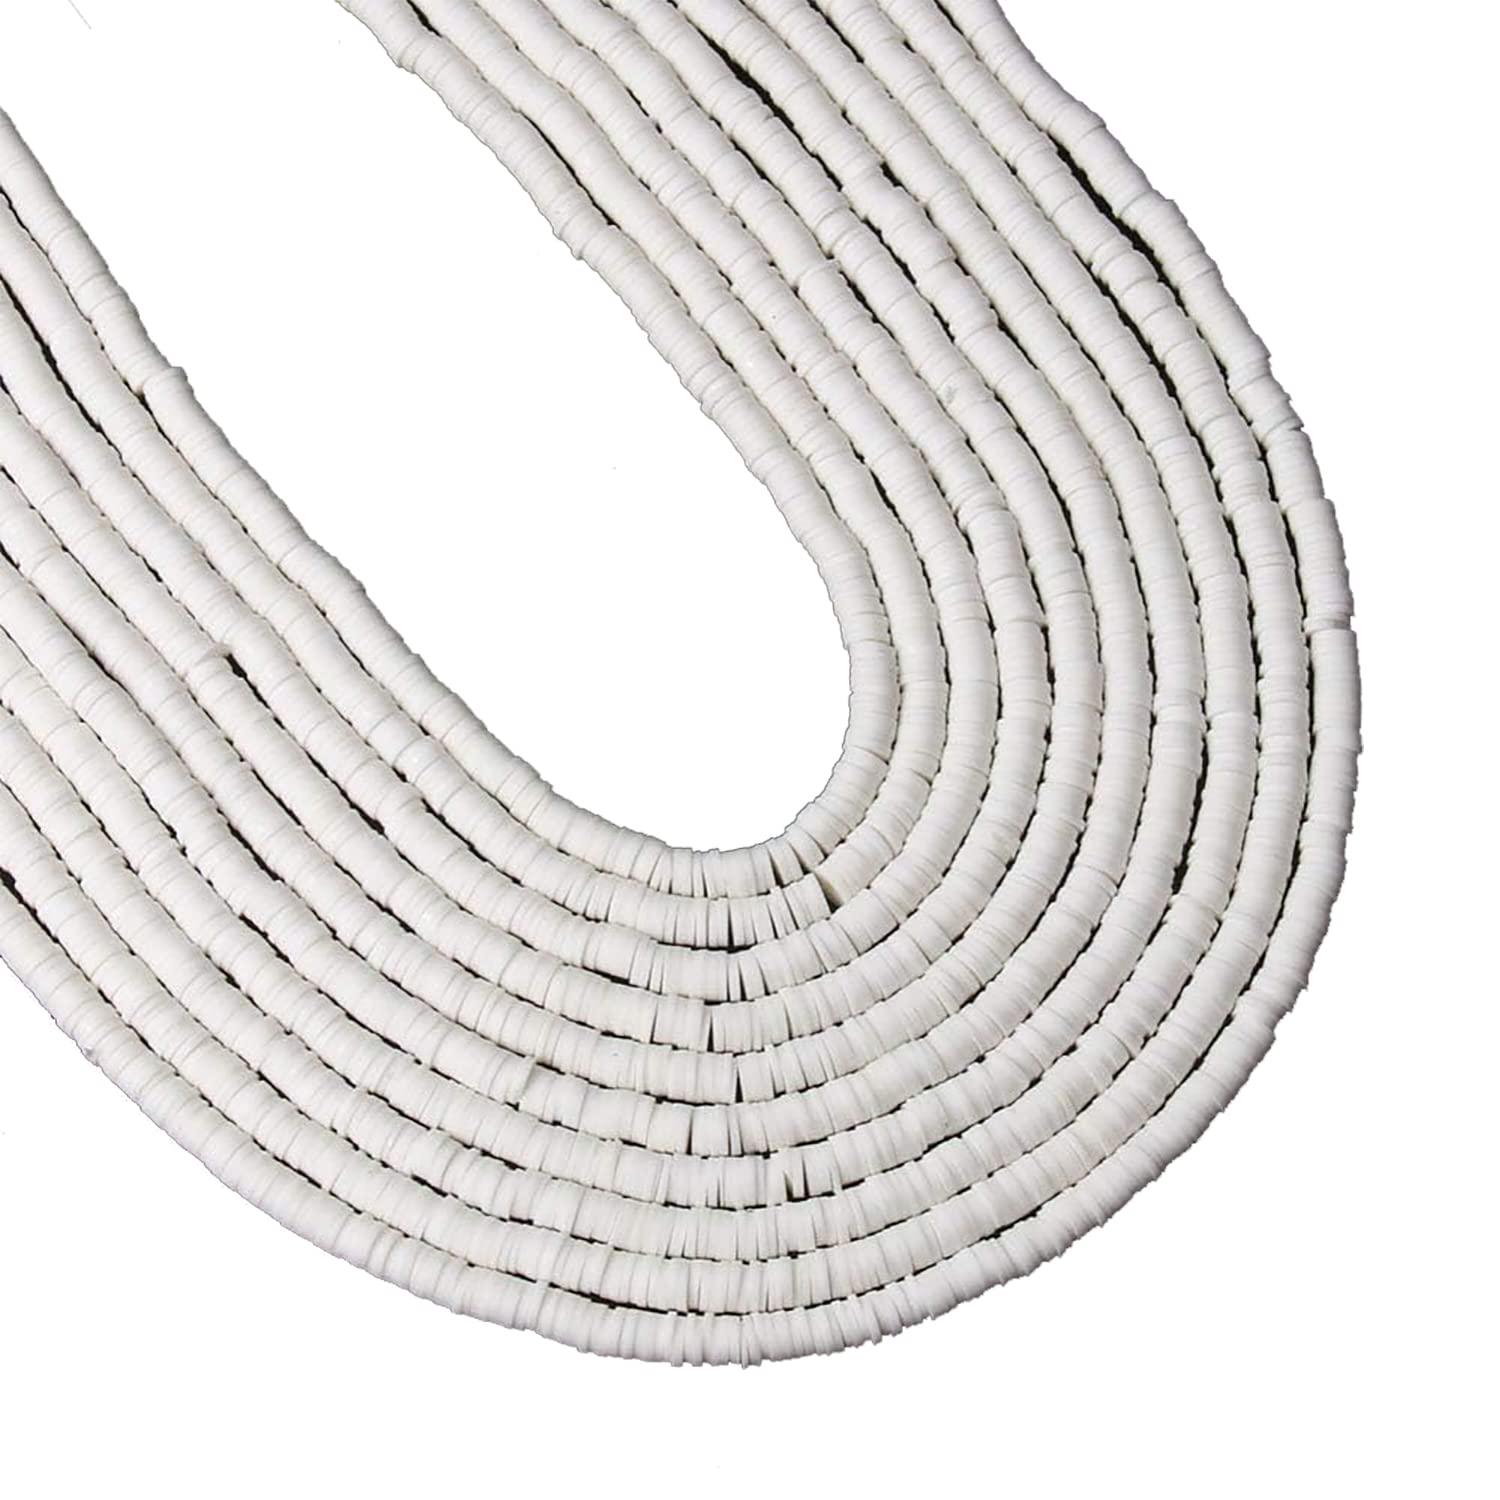 Yochus 3200 pcs white clay beads for bracelets making, 10 strands